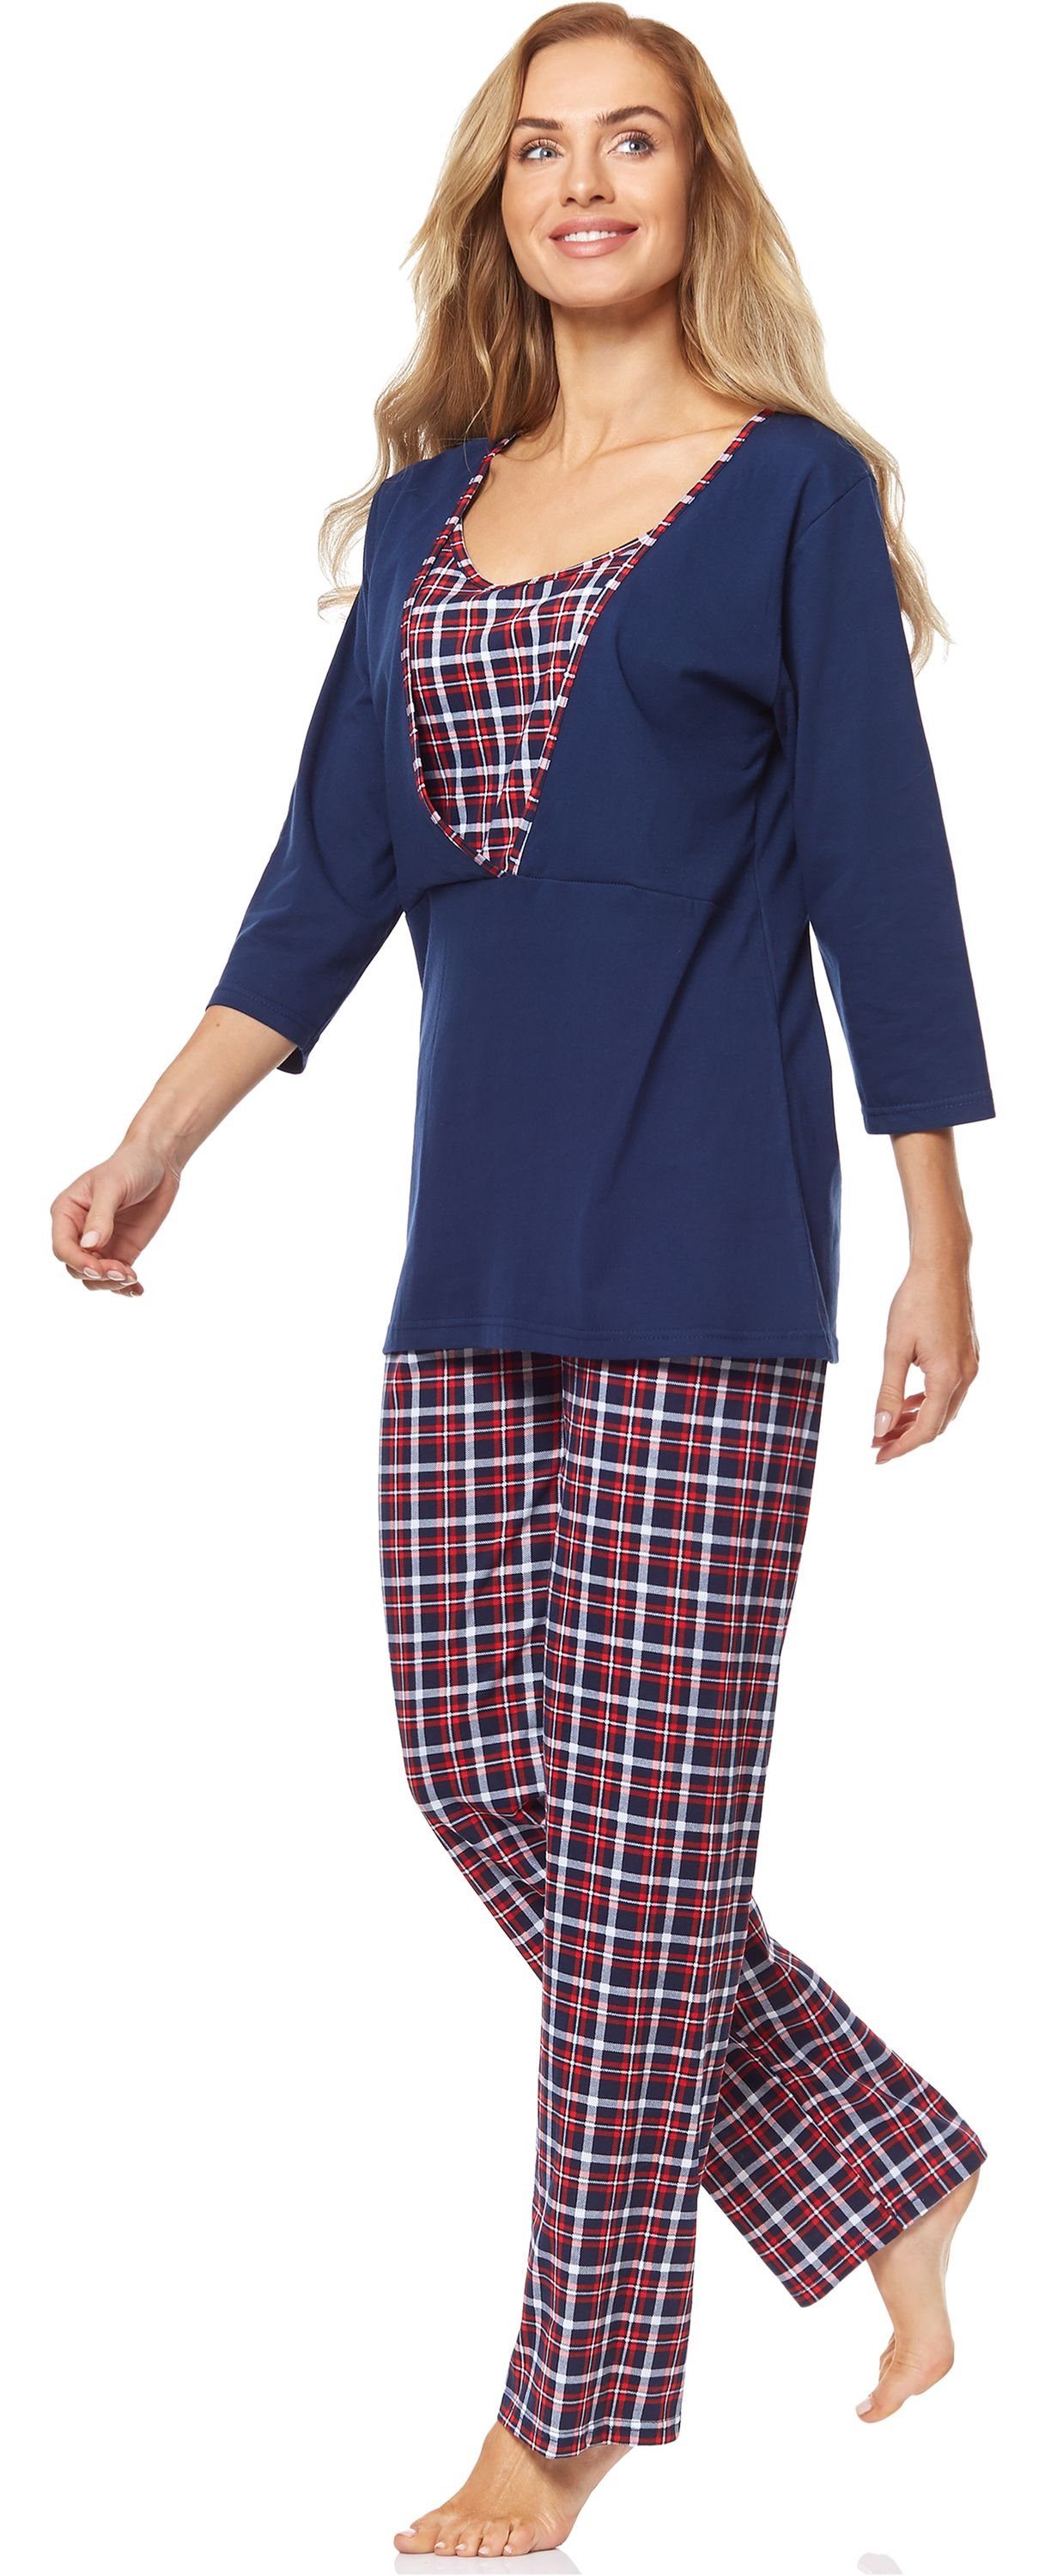 Be Mammy Umstandspyjama Dunkelblau-2 Schlafanzug Stillpyjama Damen 1N2TT2